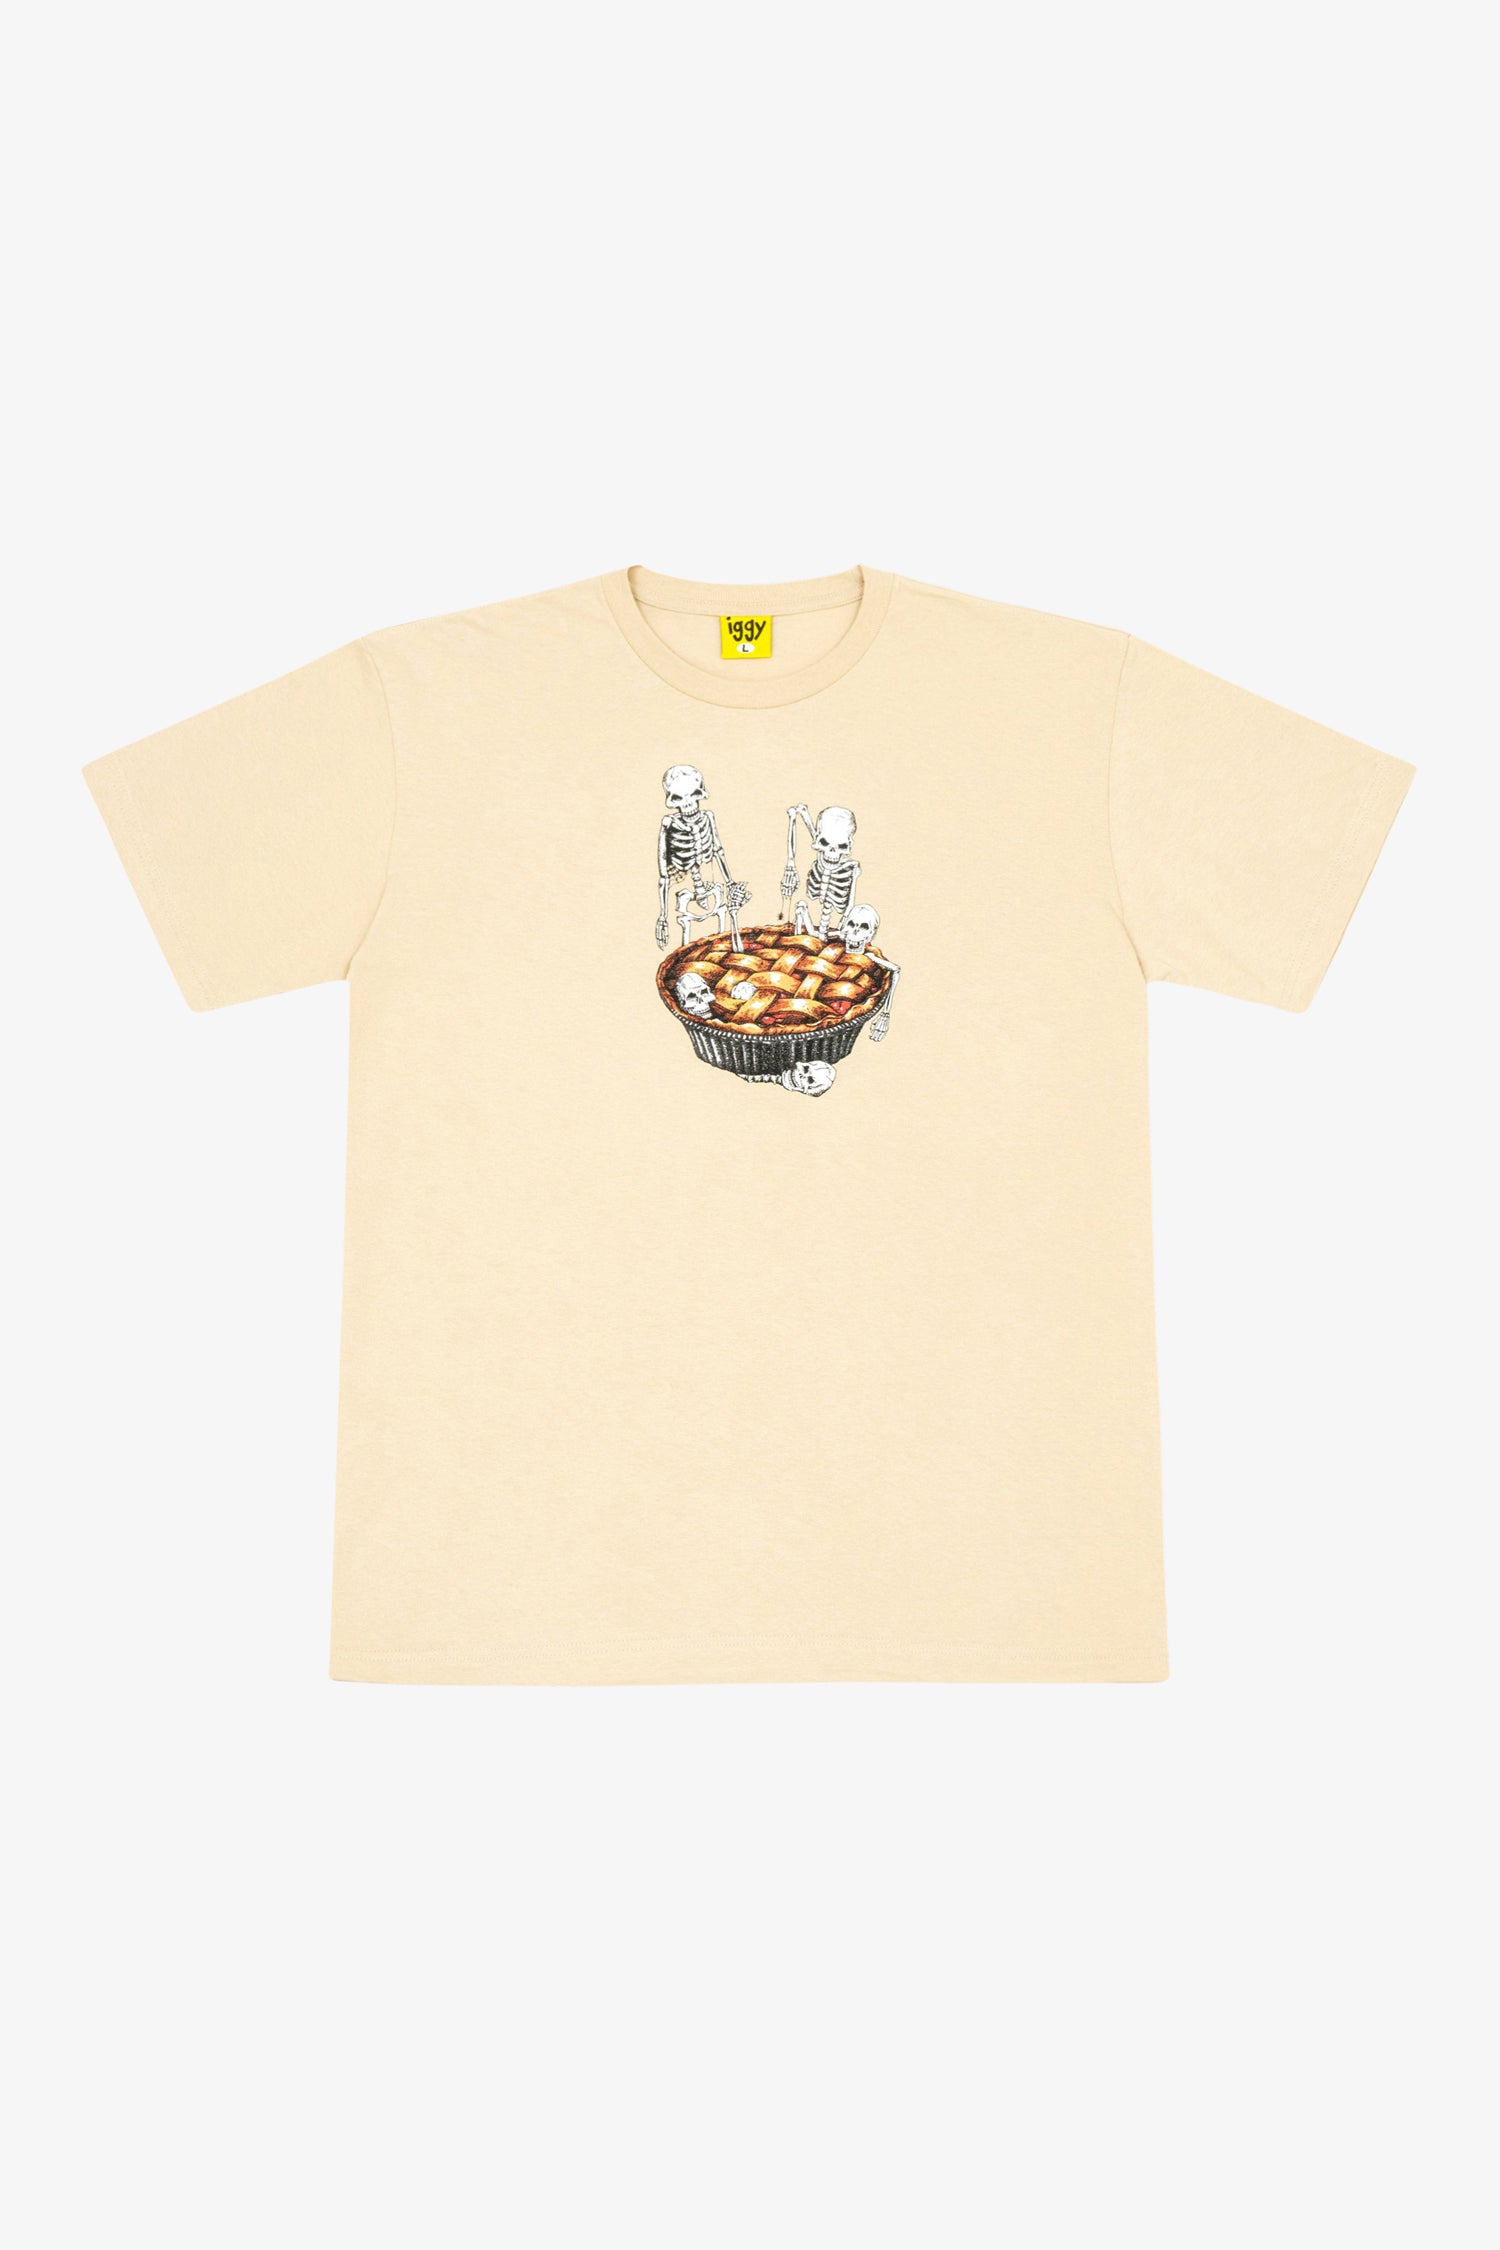 Selectshop FRAME - IGGY American Pie Tee T-Shirts Dubai